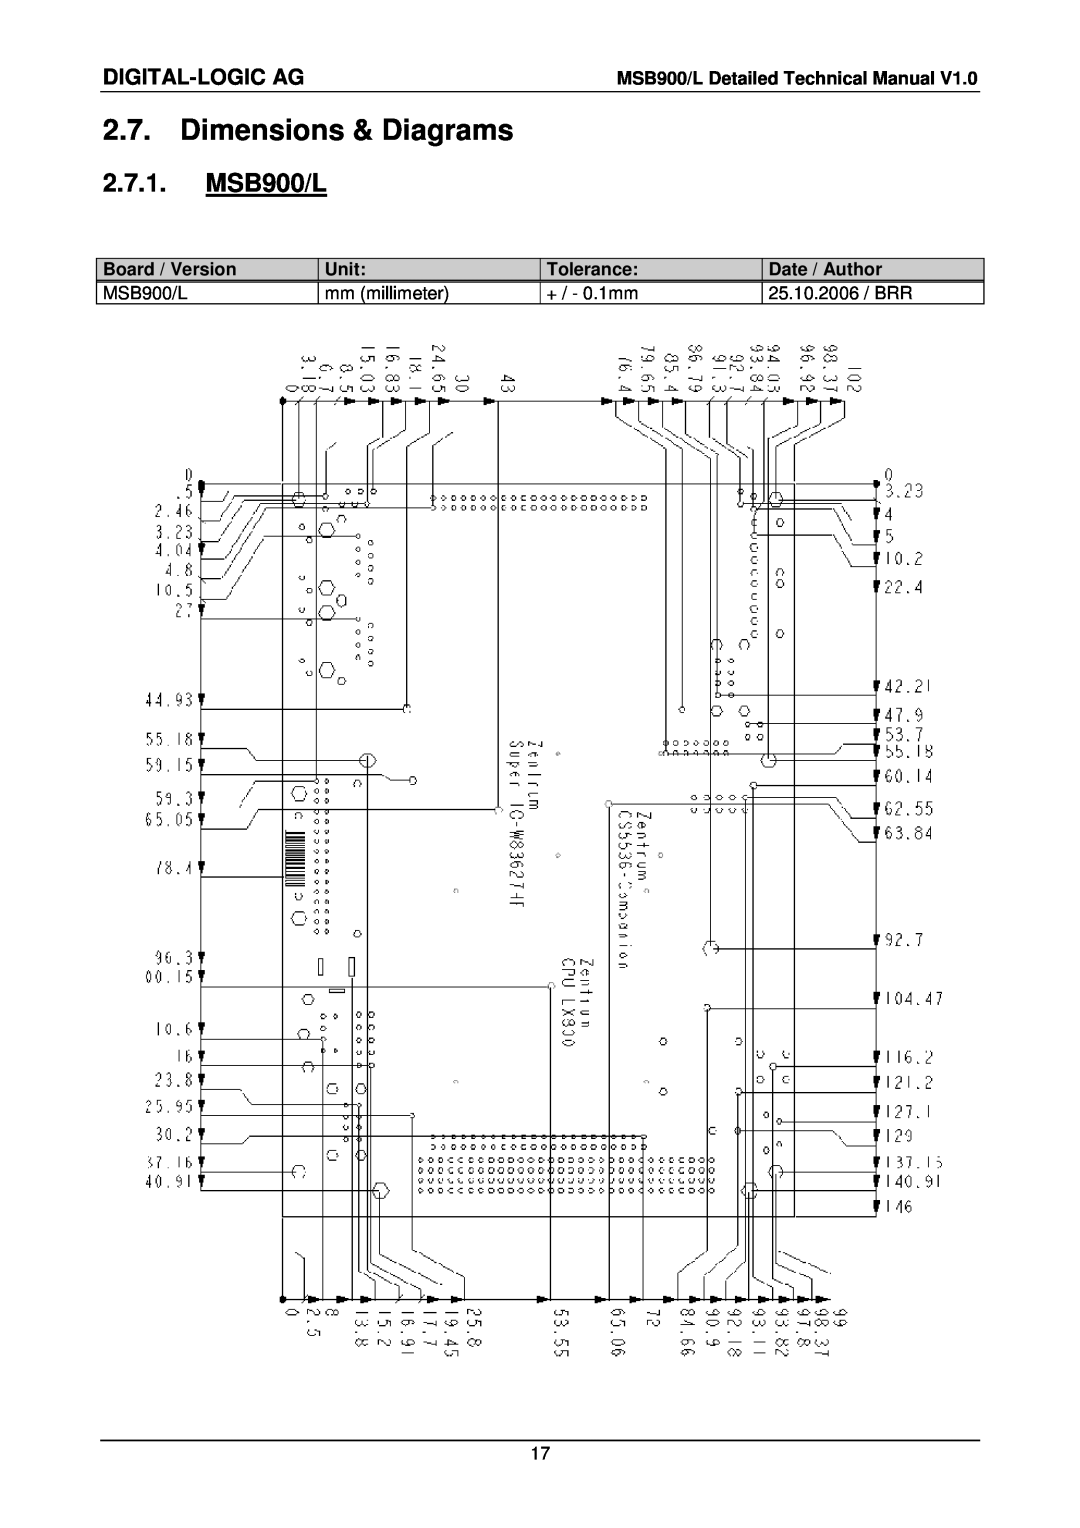 Compaq MSB900L user manual Dimensions & Diagrams, MSB900/L, Digital-Logic Ag 